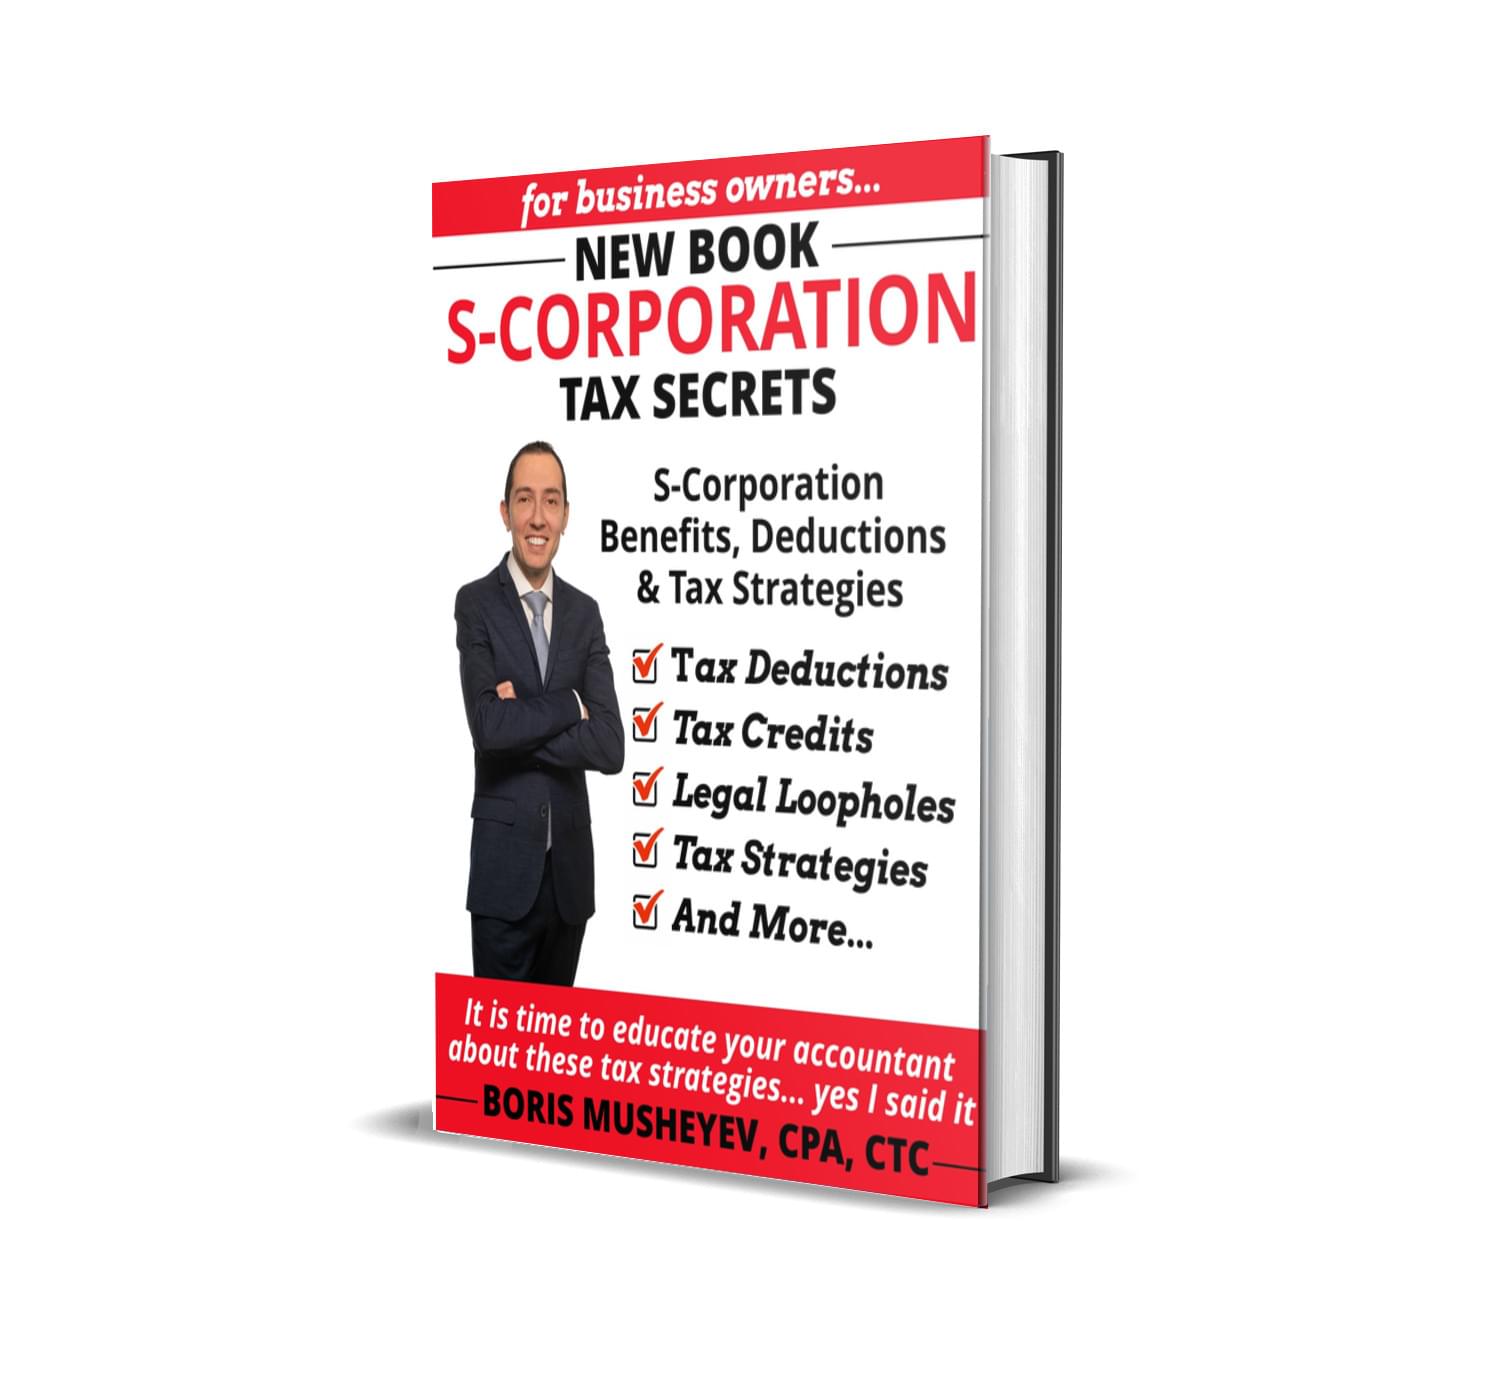 New SCorp Tax Benefits, Deductions & Strategies Book